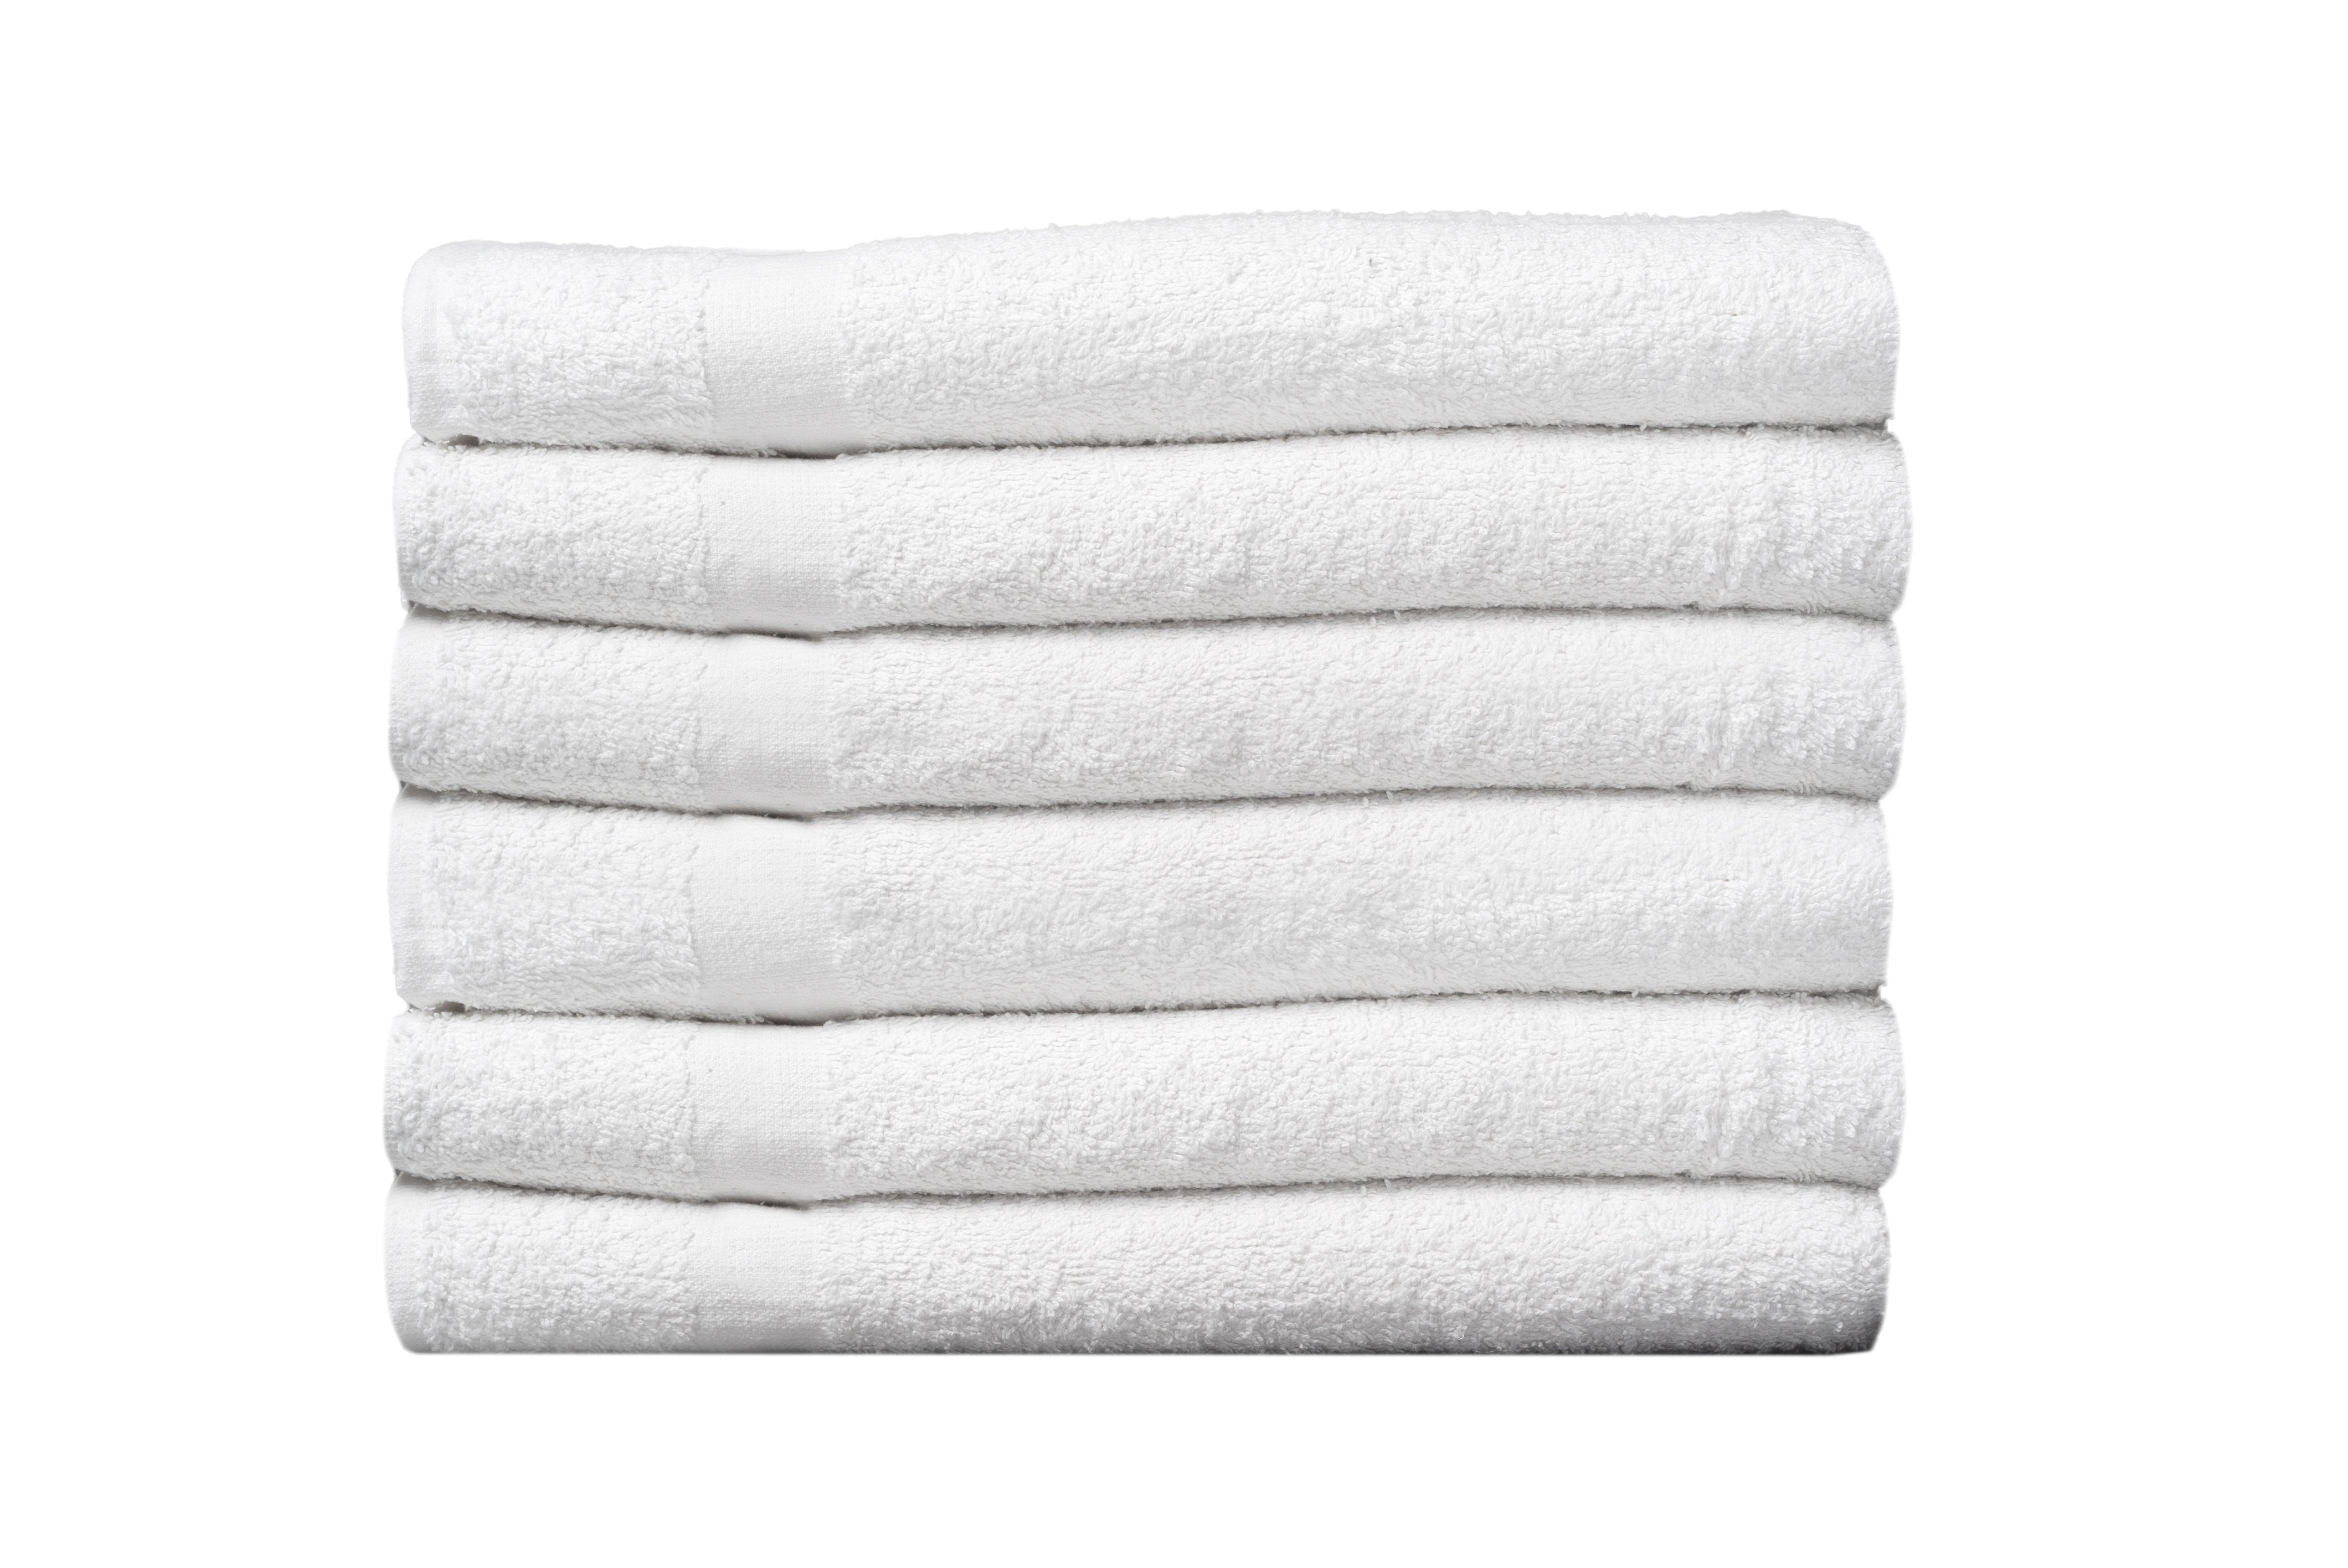 Partex Supreme 24 x 50 White Towels - 24 x 50